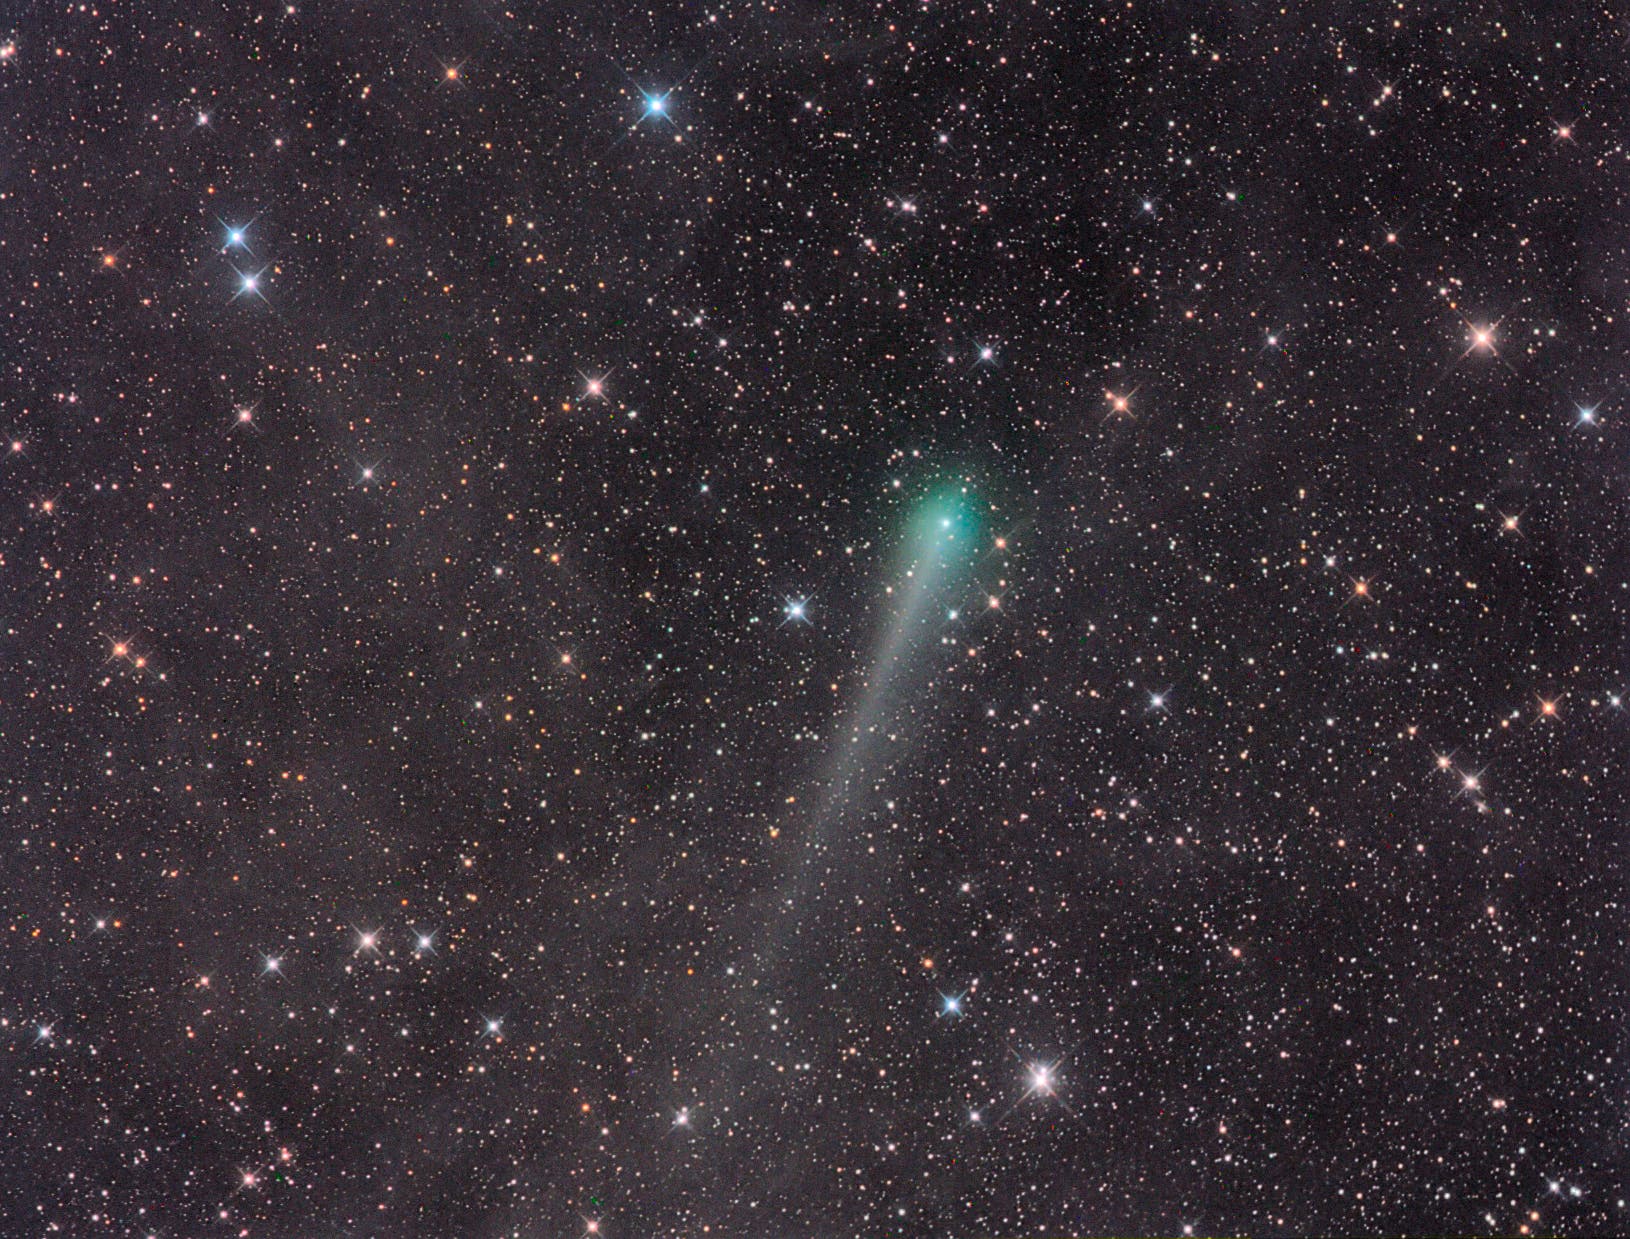 Komet C/2012 F6 Lemmon, eingebettet in Staubnebel